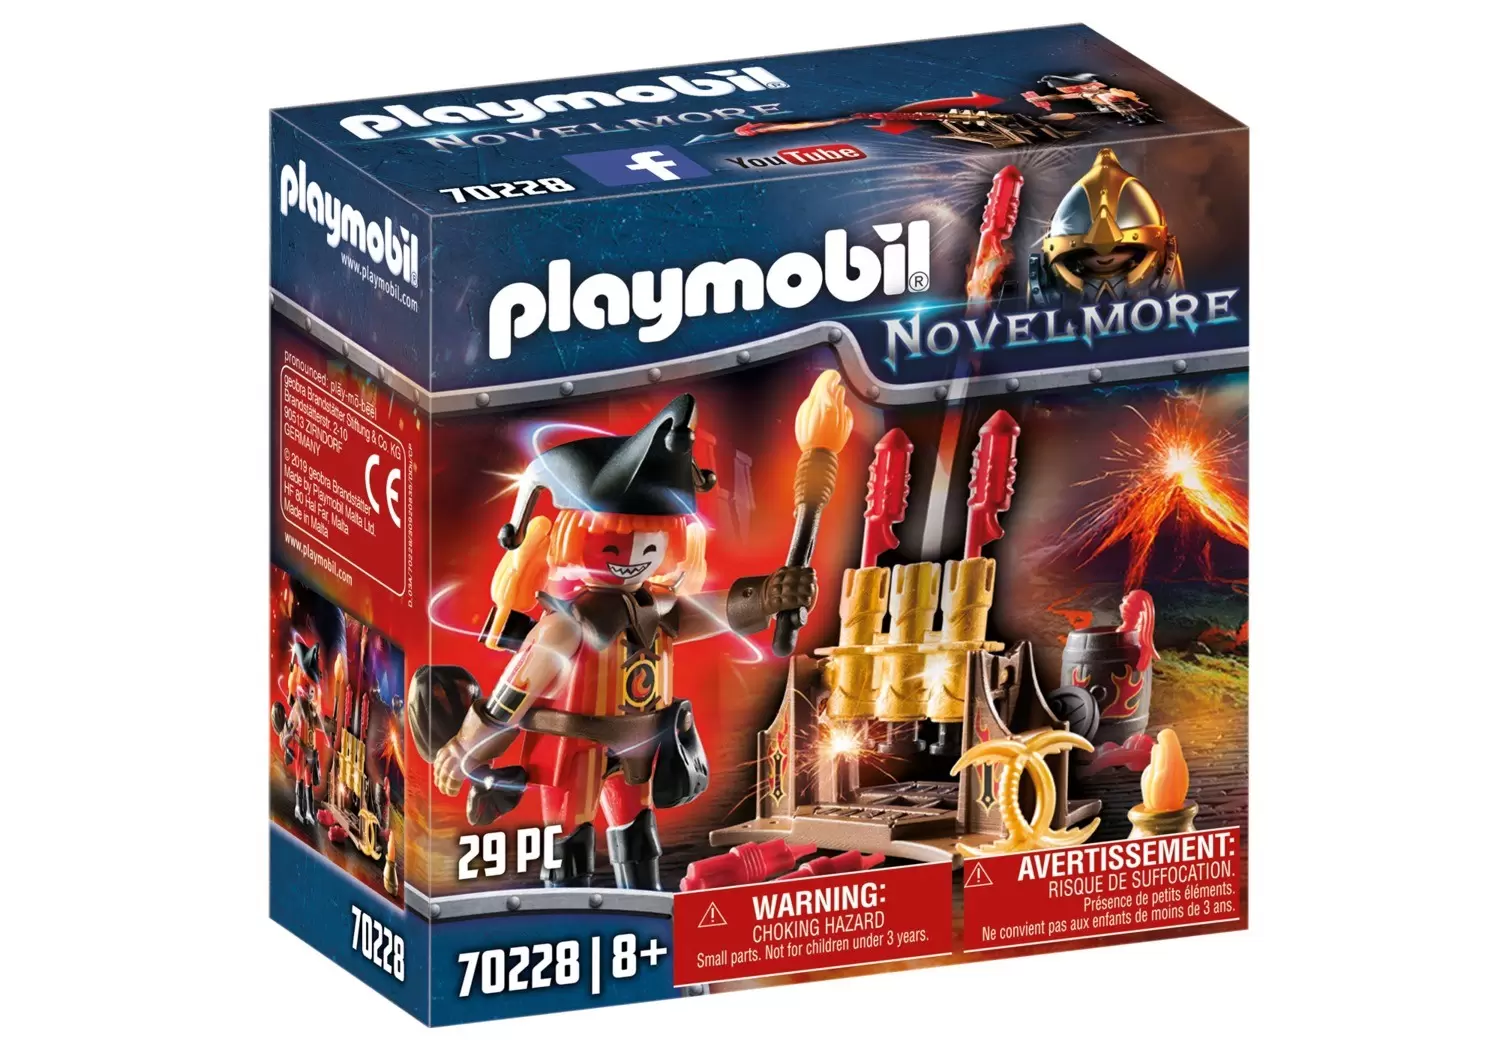 Playmobil Novelmore - Fireworks Clown